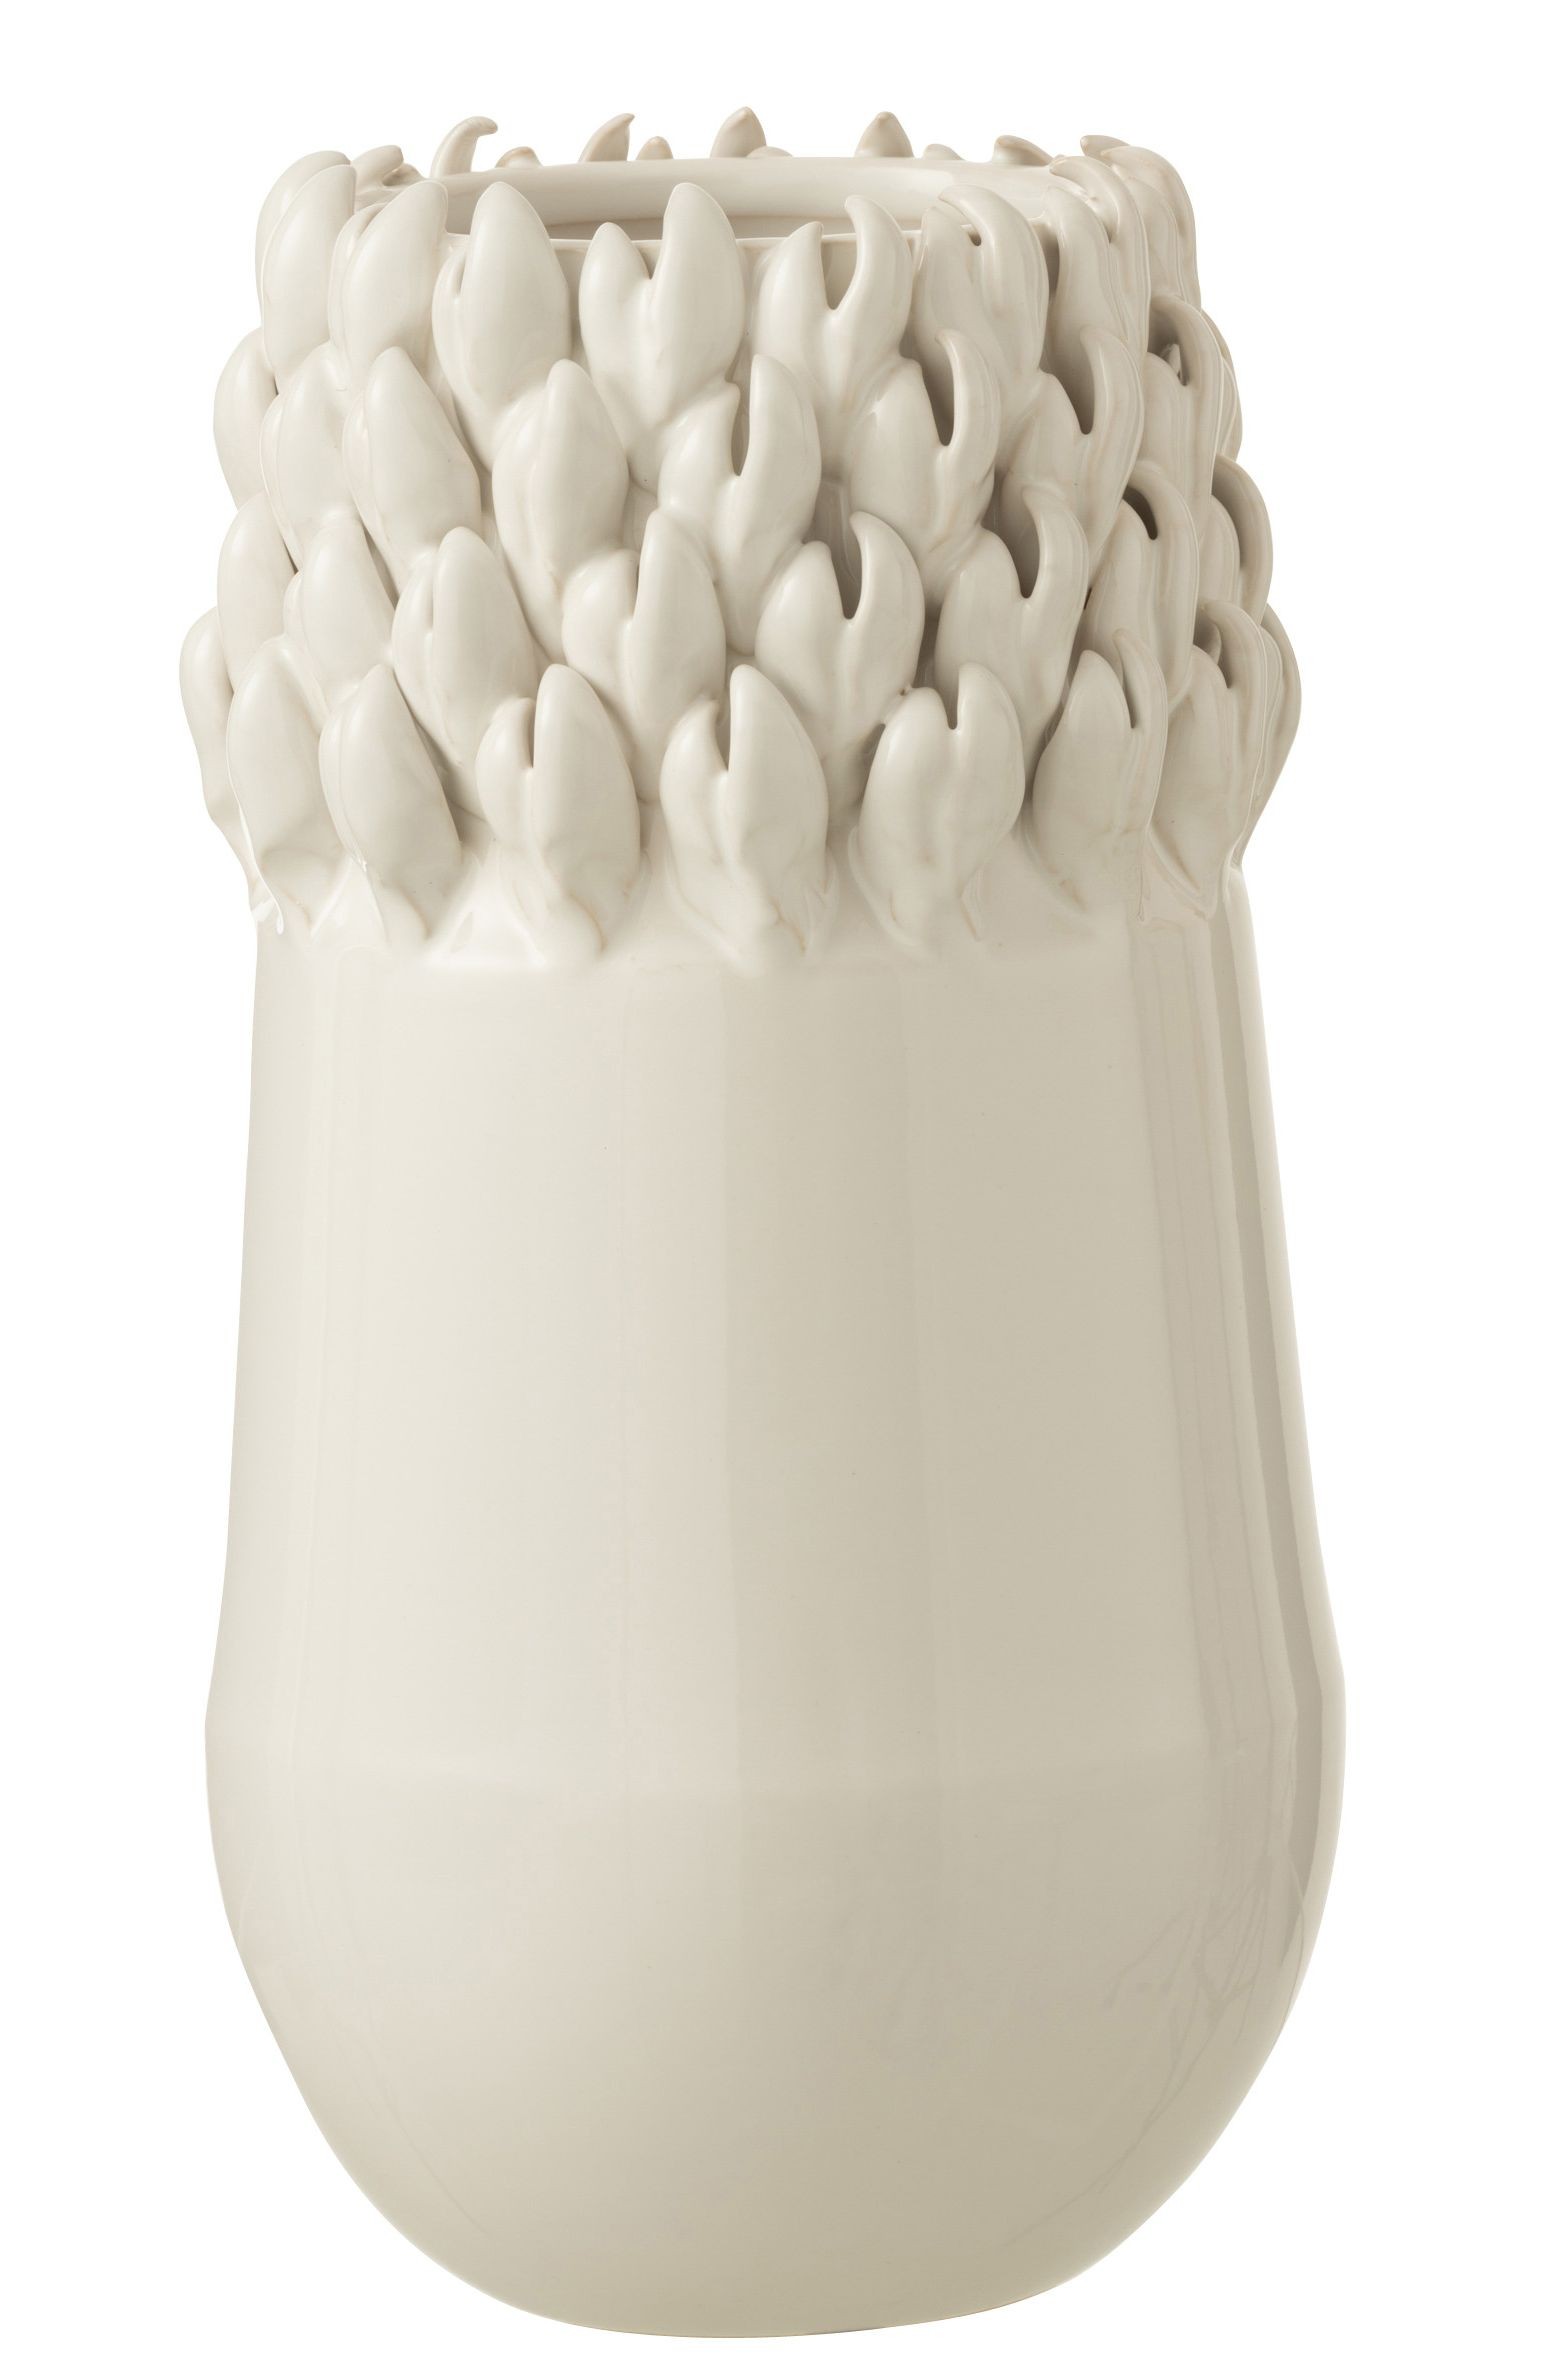 Krémová keramická váza Ibiza white - Ø 14*27cm J-Line by Jolipa